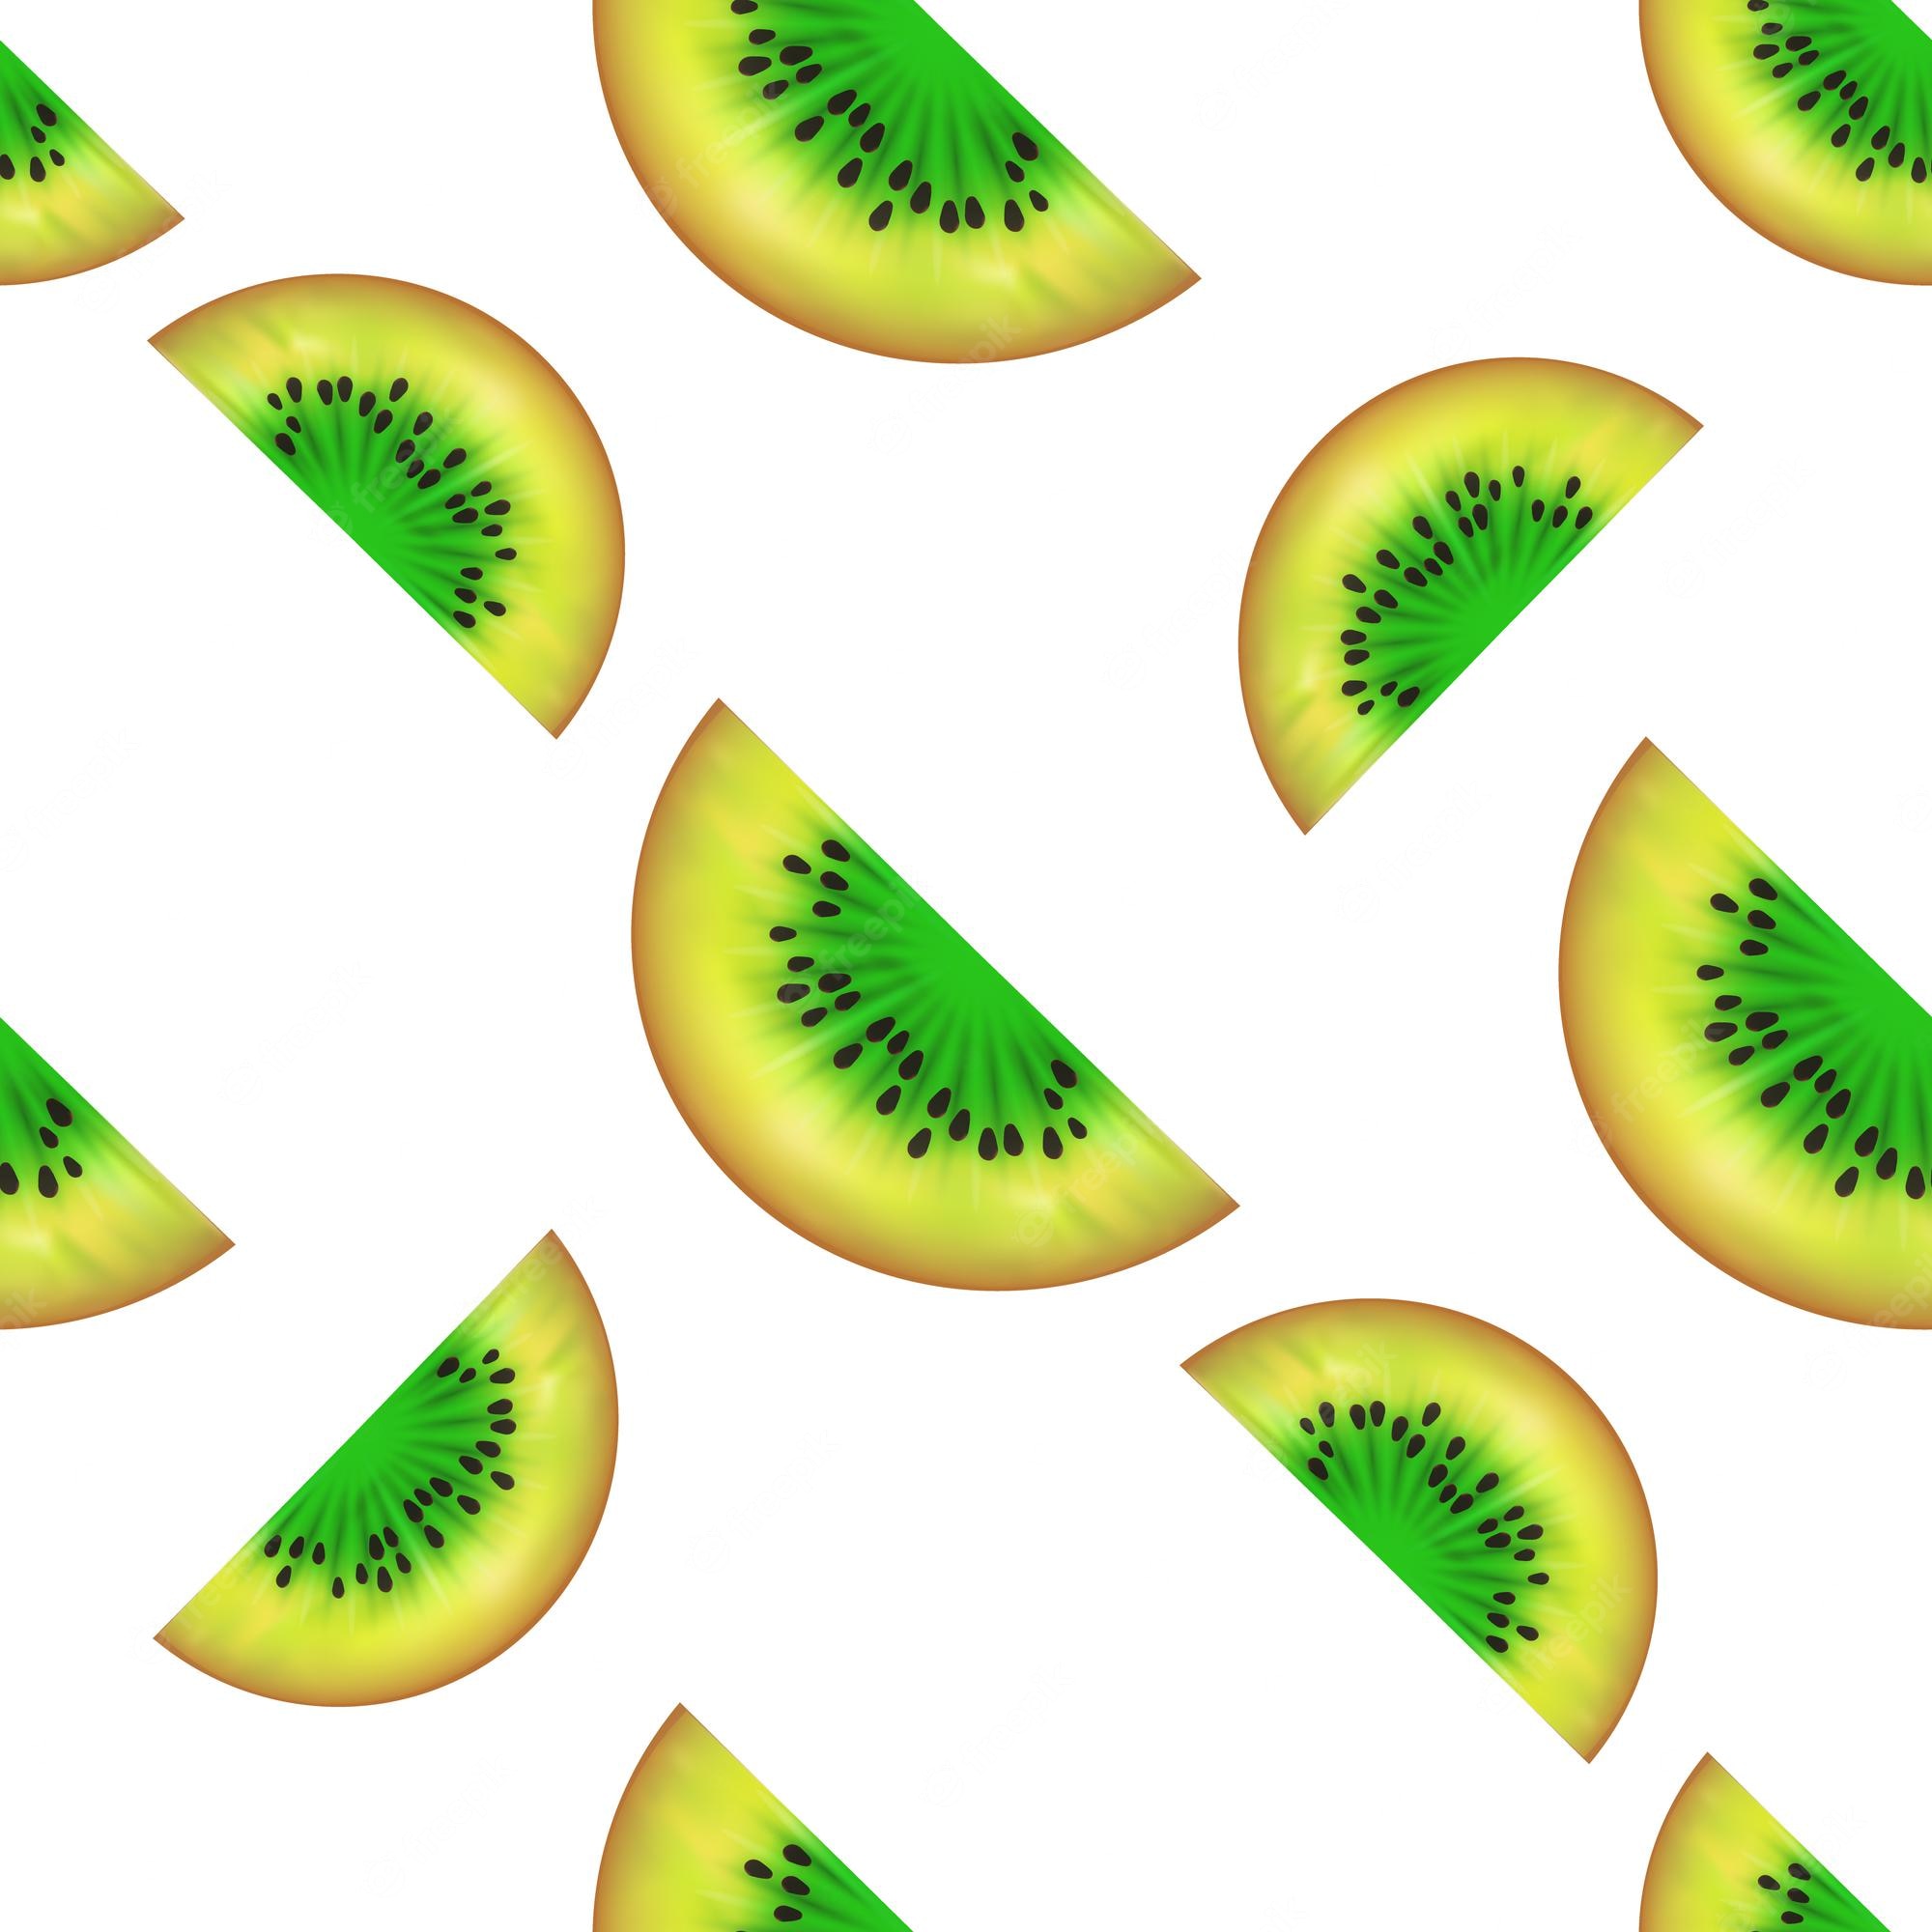 Fruit Phone Wallpapers